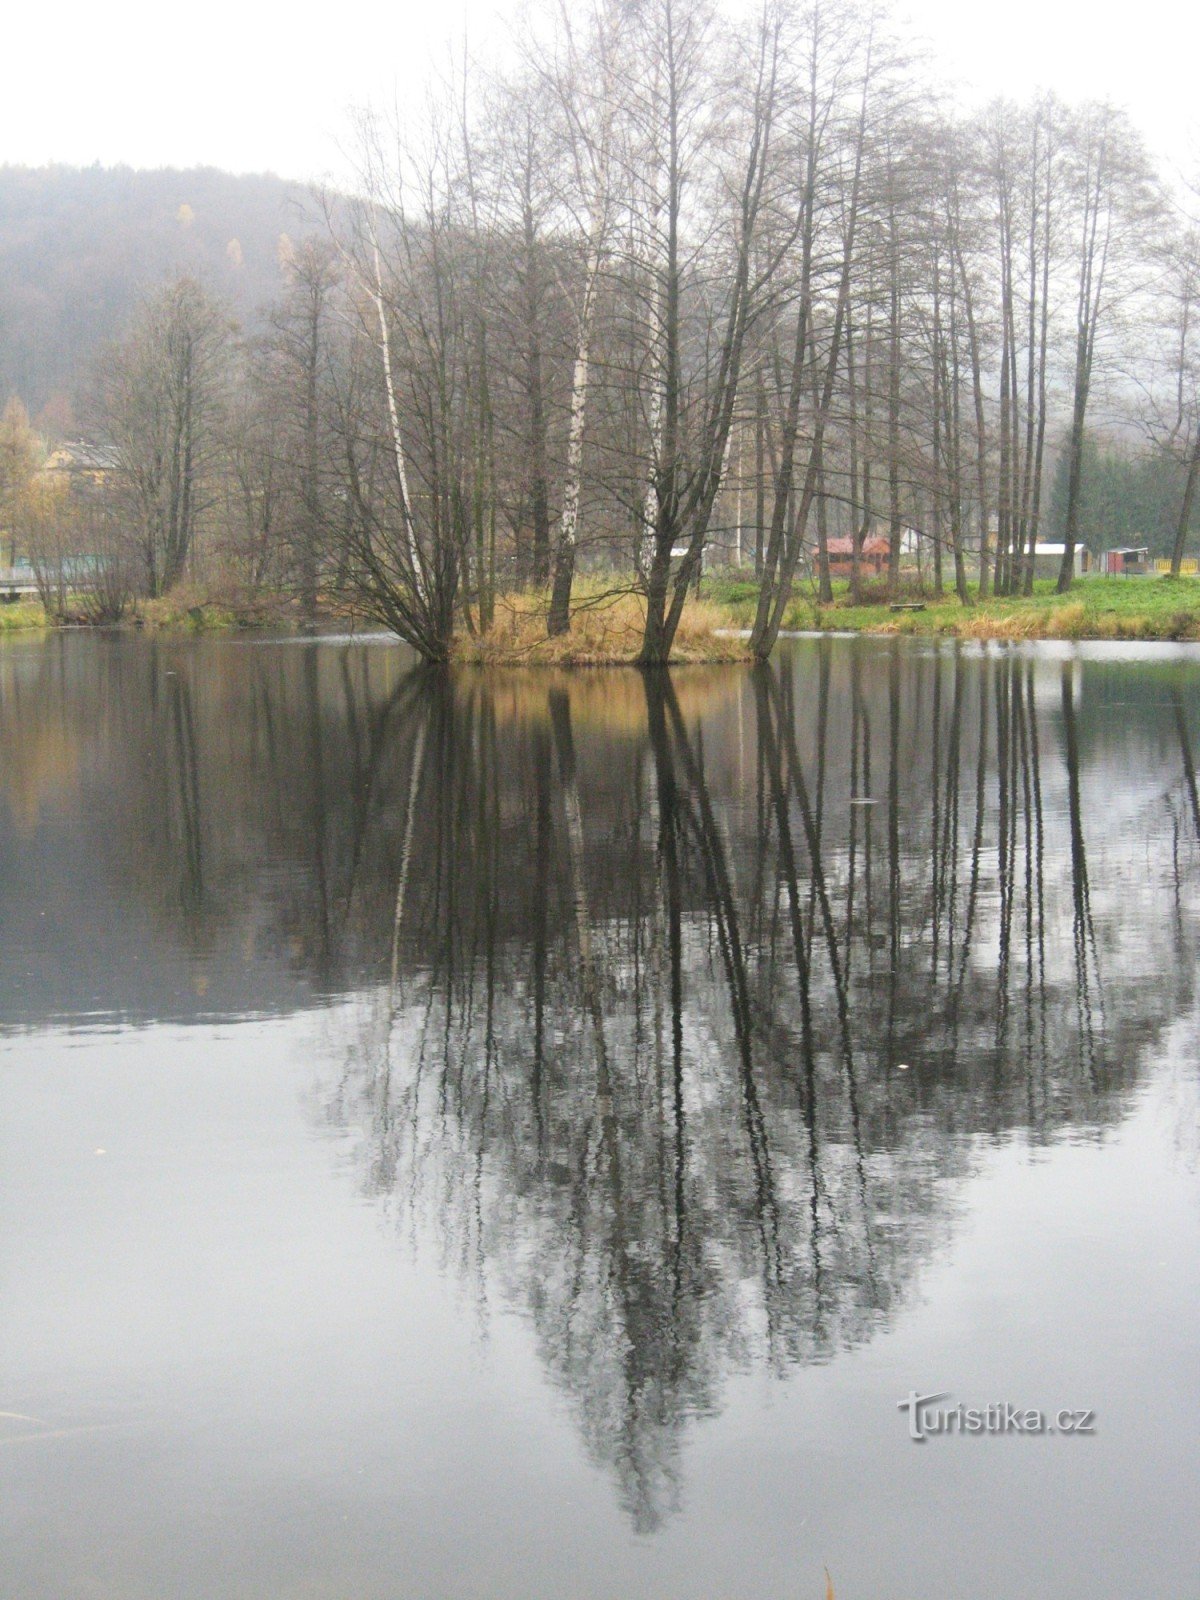 lower pond